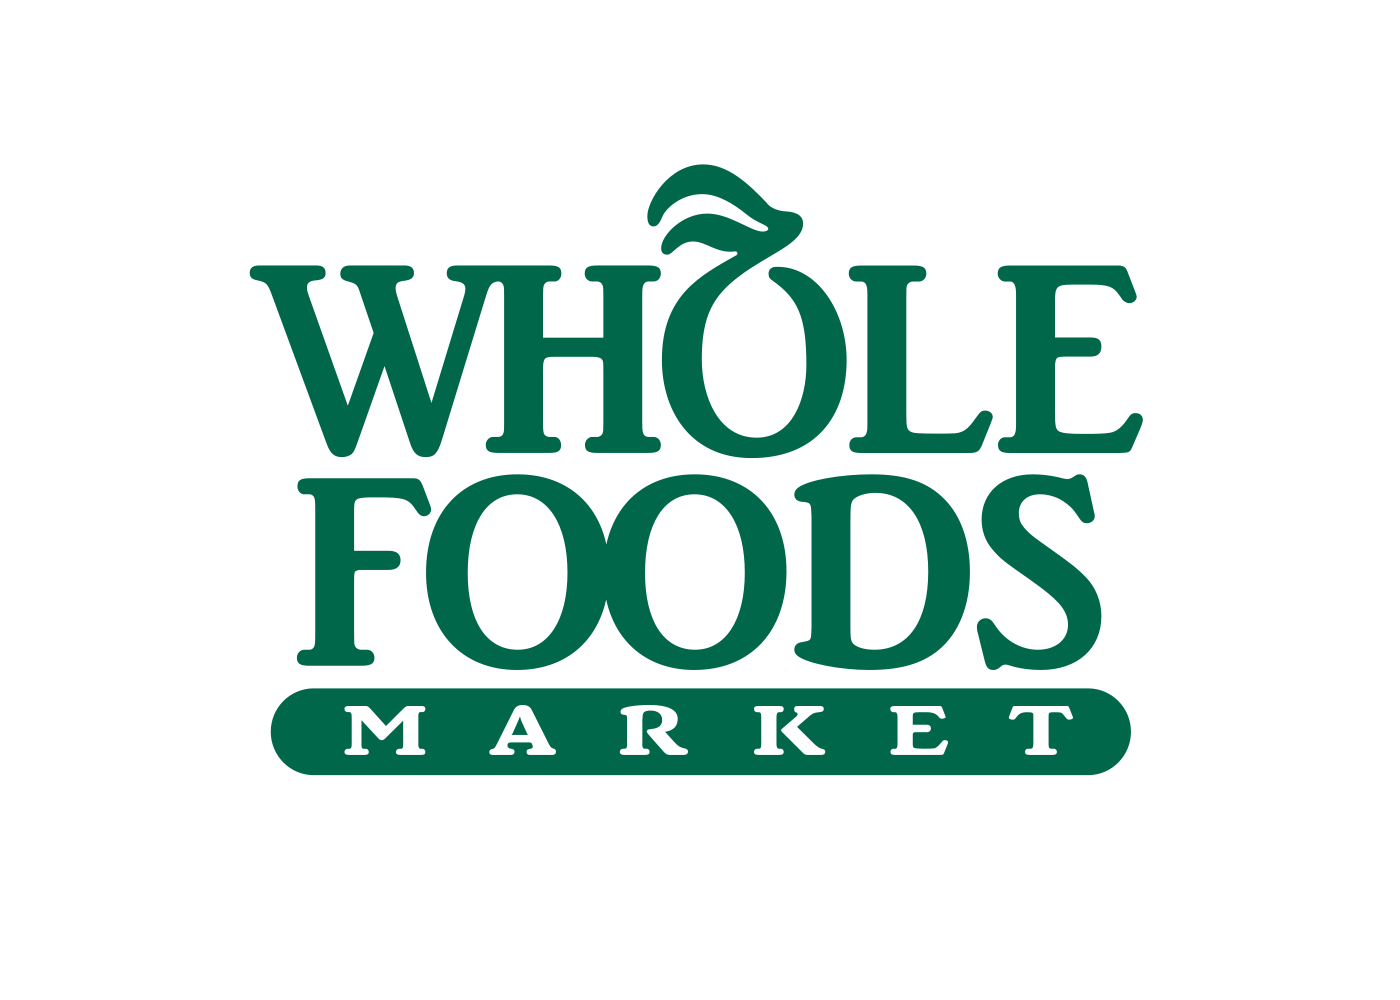 Whole Foods Market Logo - Whole Foods Market identity - Fonts In Use